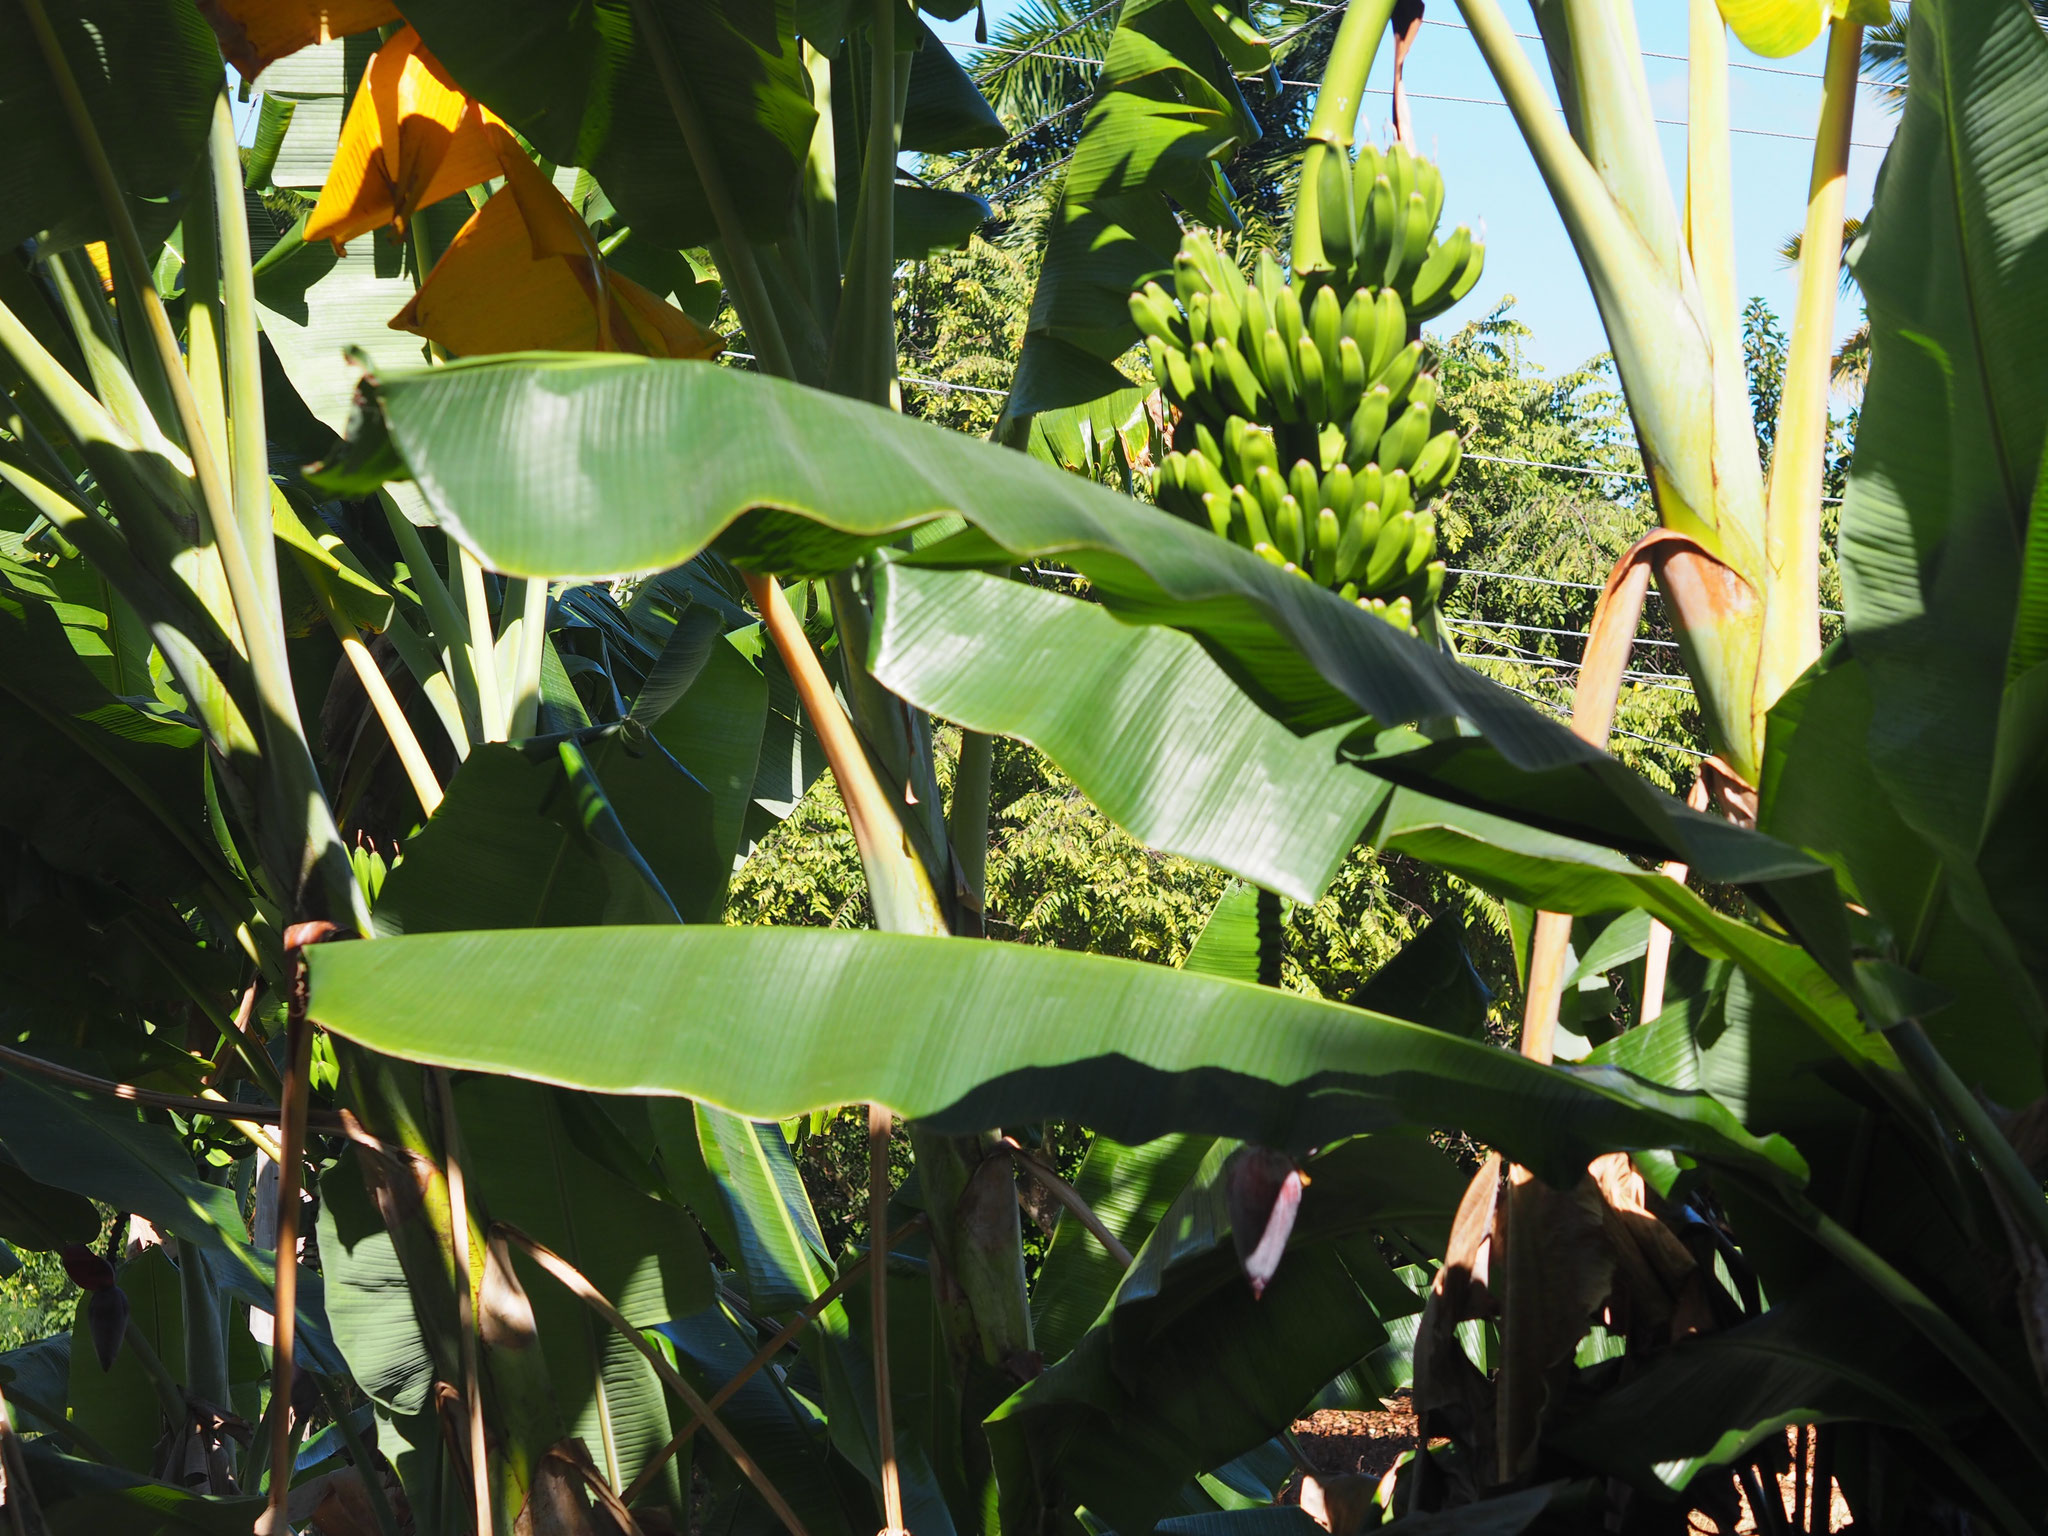 Bananen auf Kuba, hier bei Trinidad auf Kuba